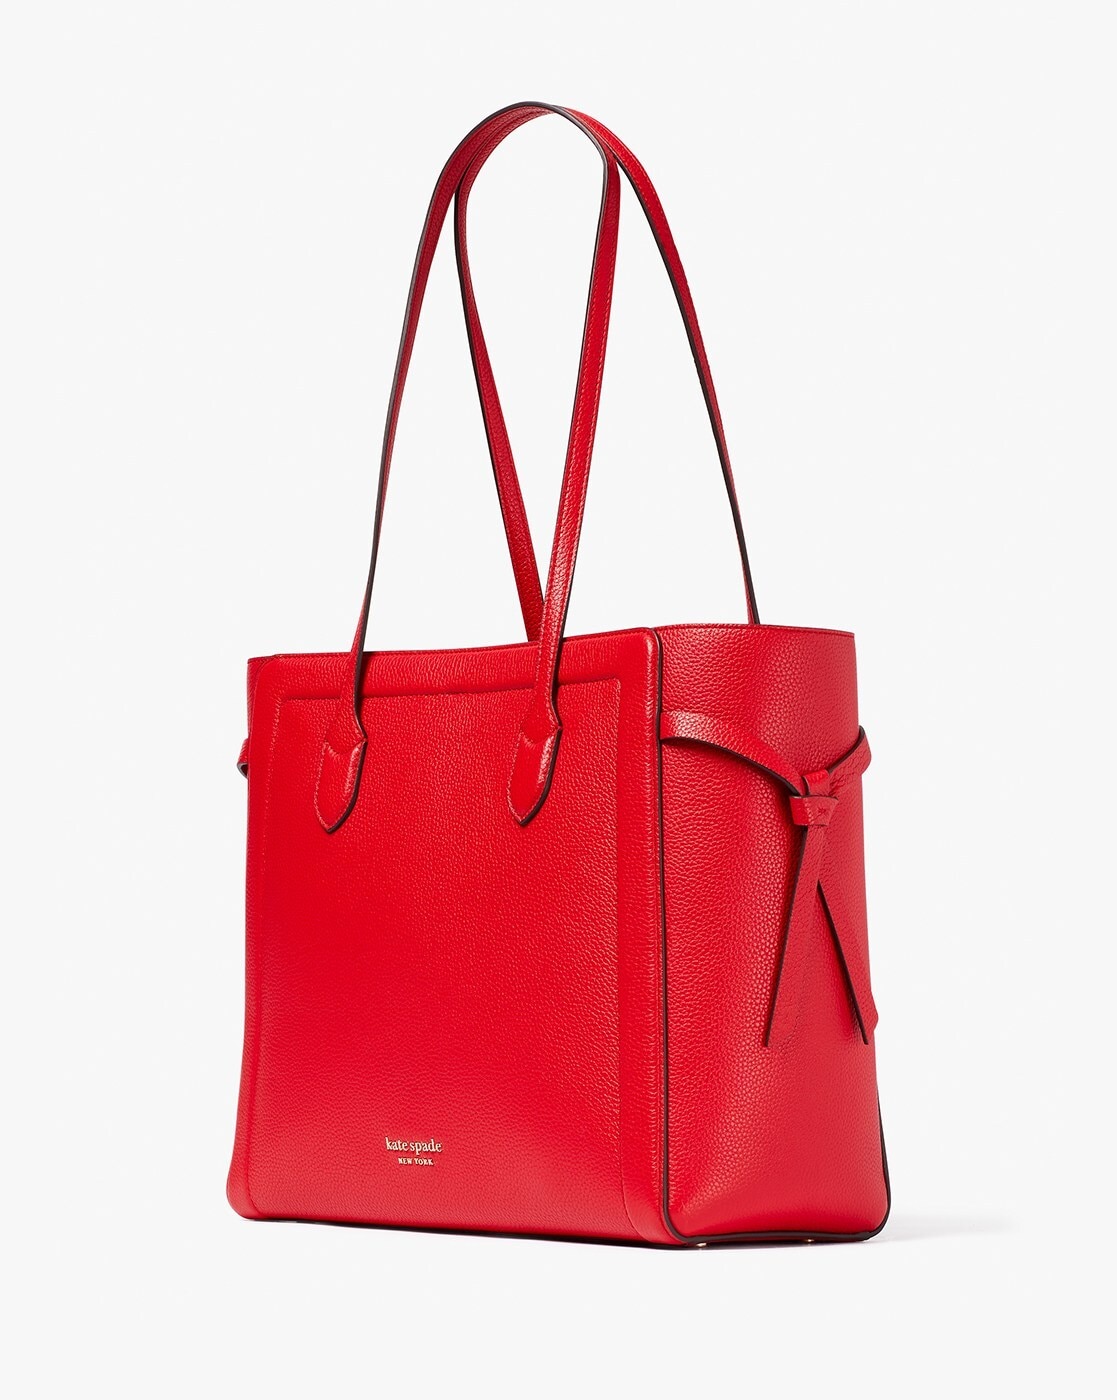 Designer handbags for women | Limited edition | Qisabags